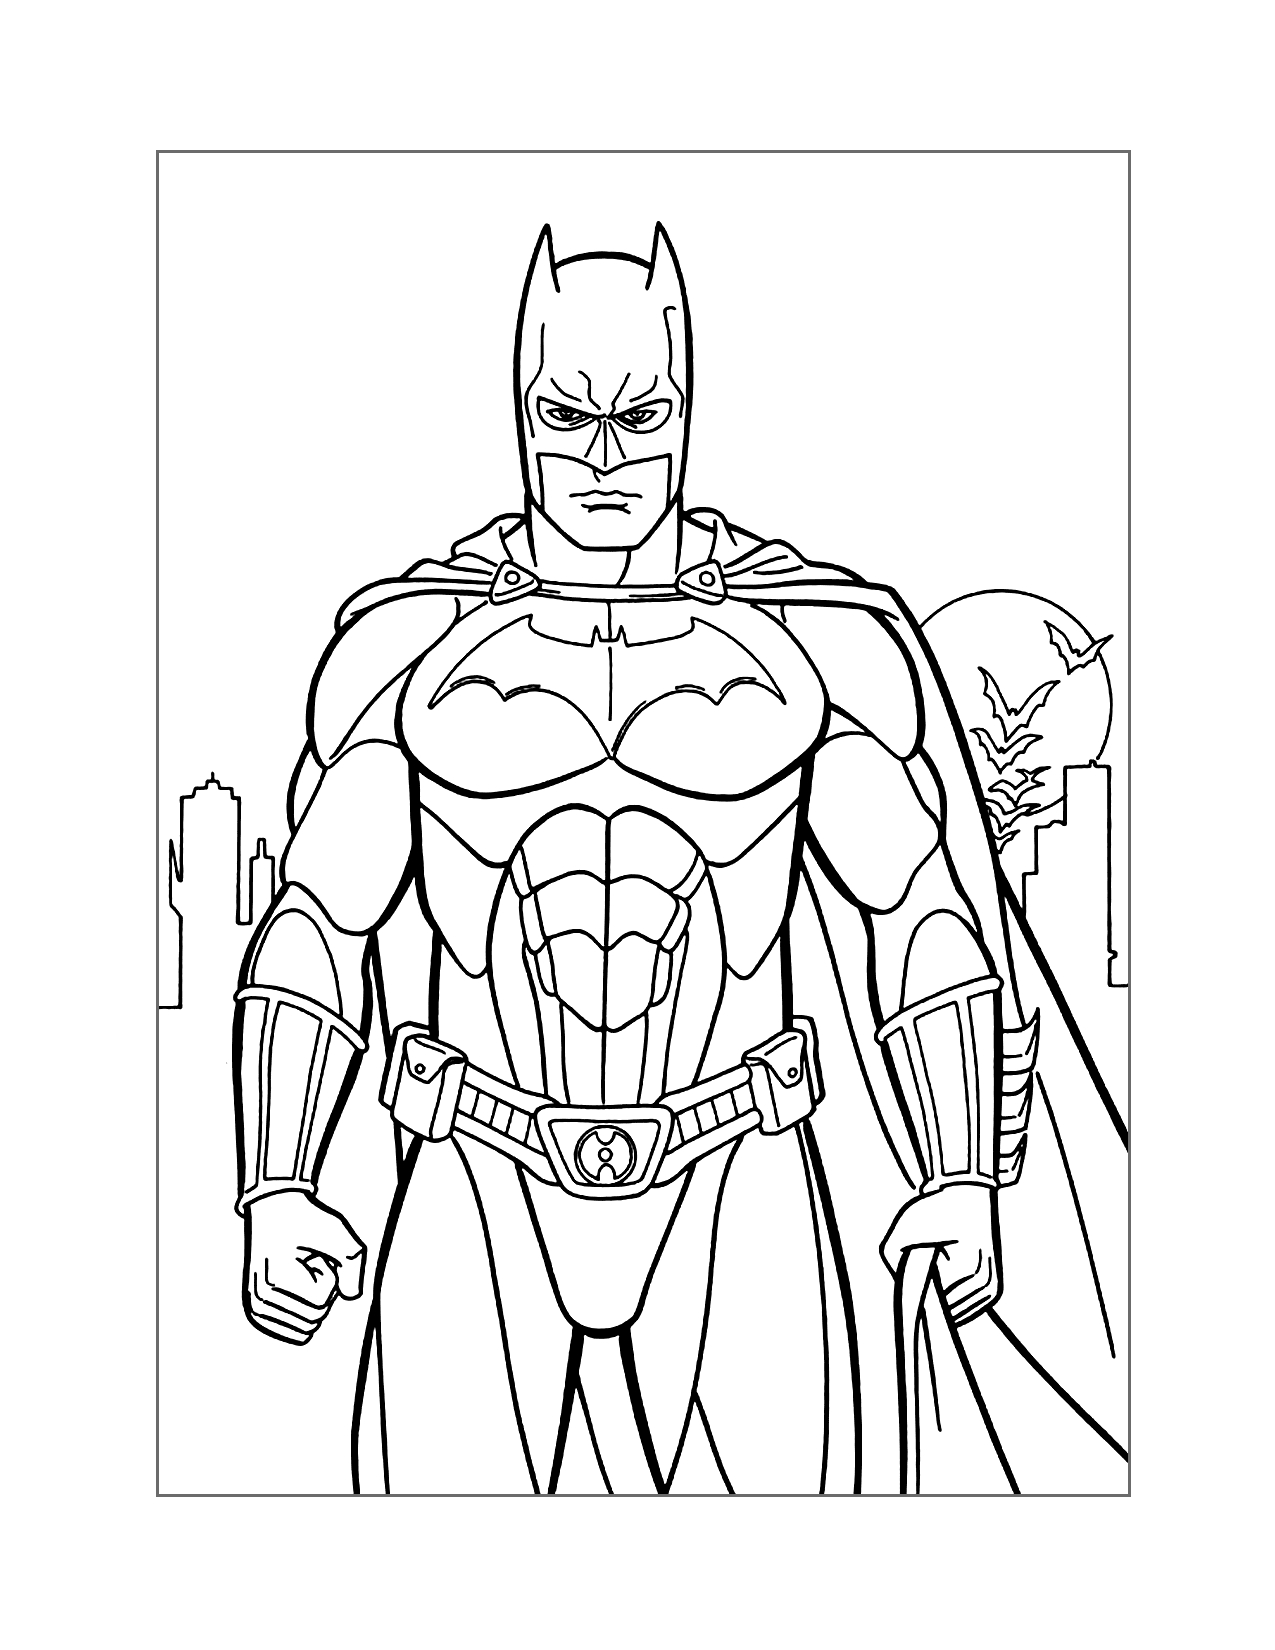 The Batman Coloring Page